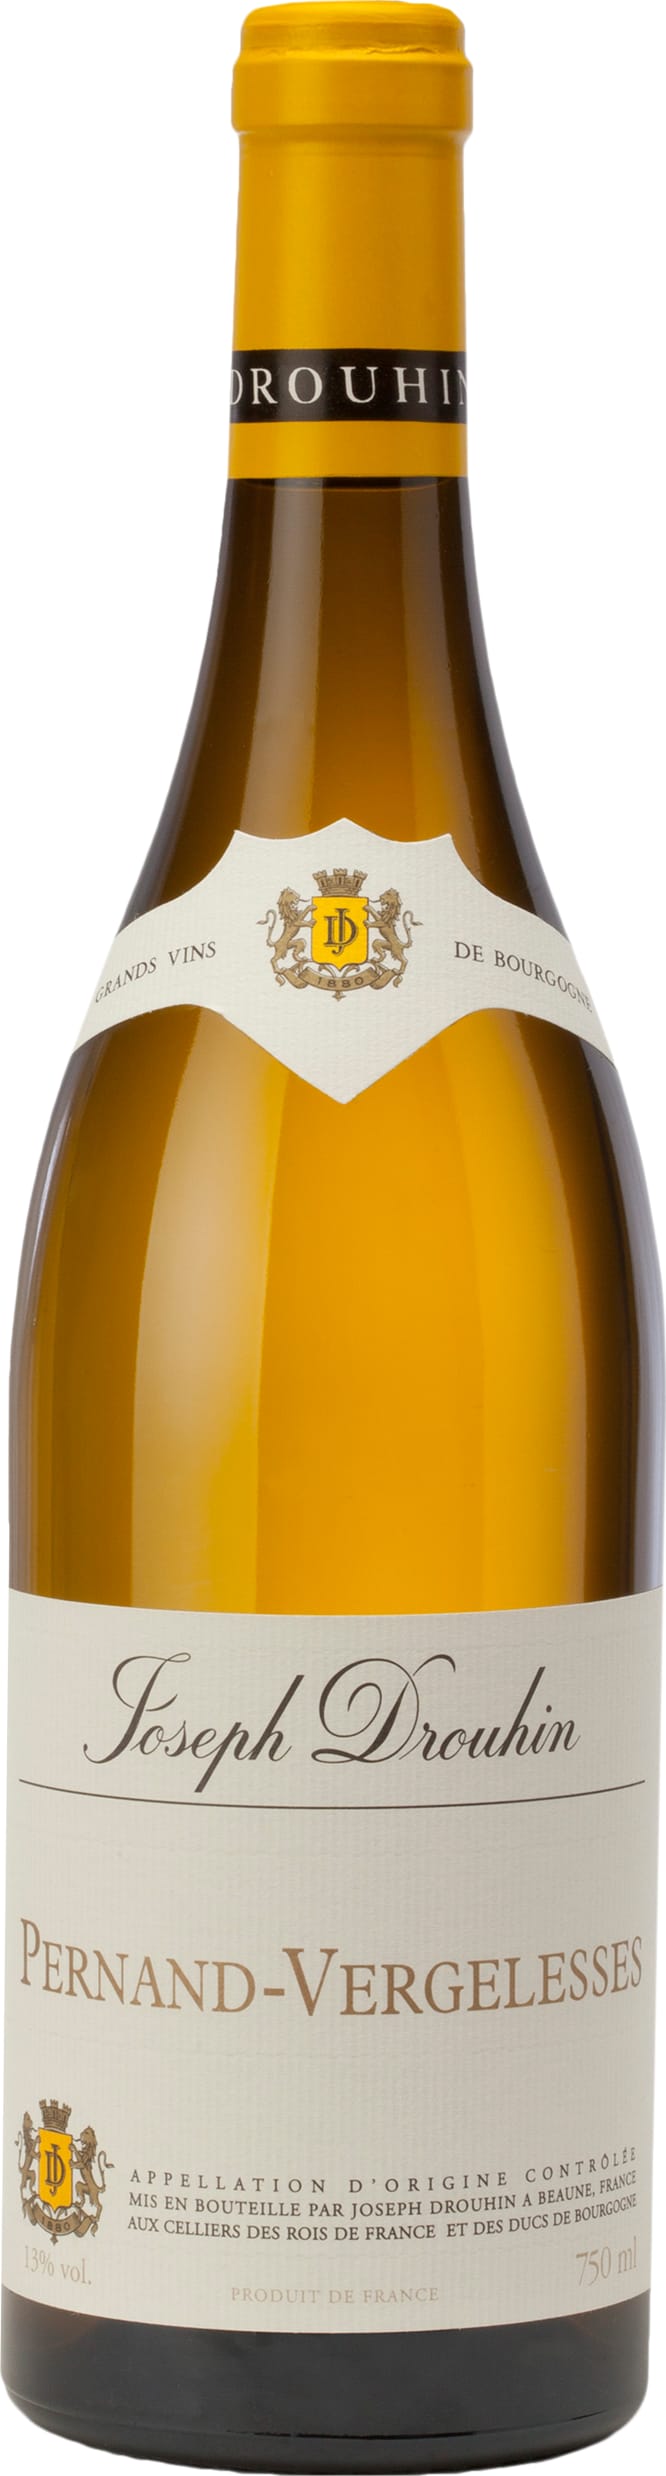 Joseph Drouhin Pernand-Vergelesses Blanc 2020 75cl - Buy Joseph Drouhin Wines from GREAT WINES DIRECT wine shop